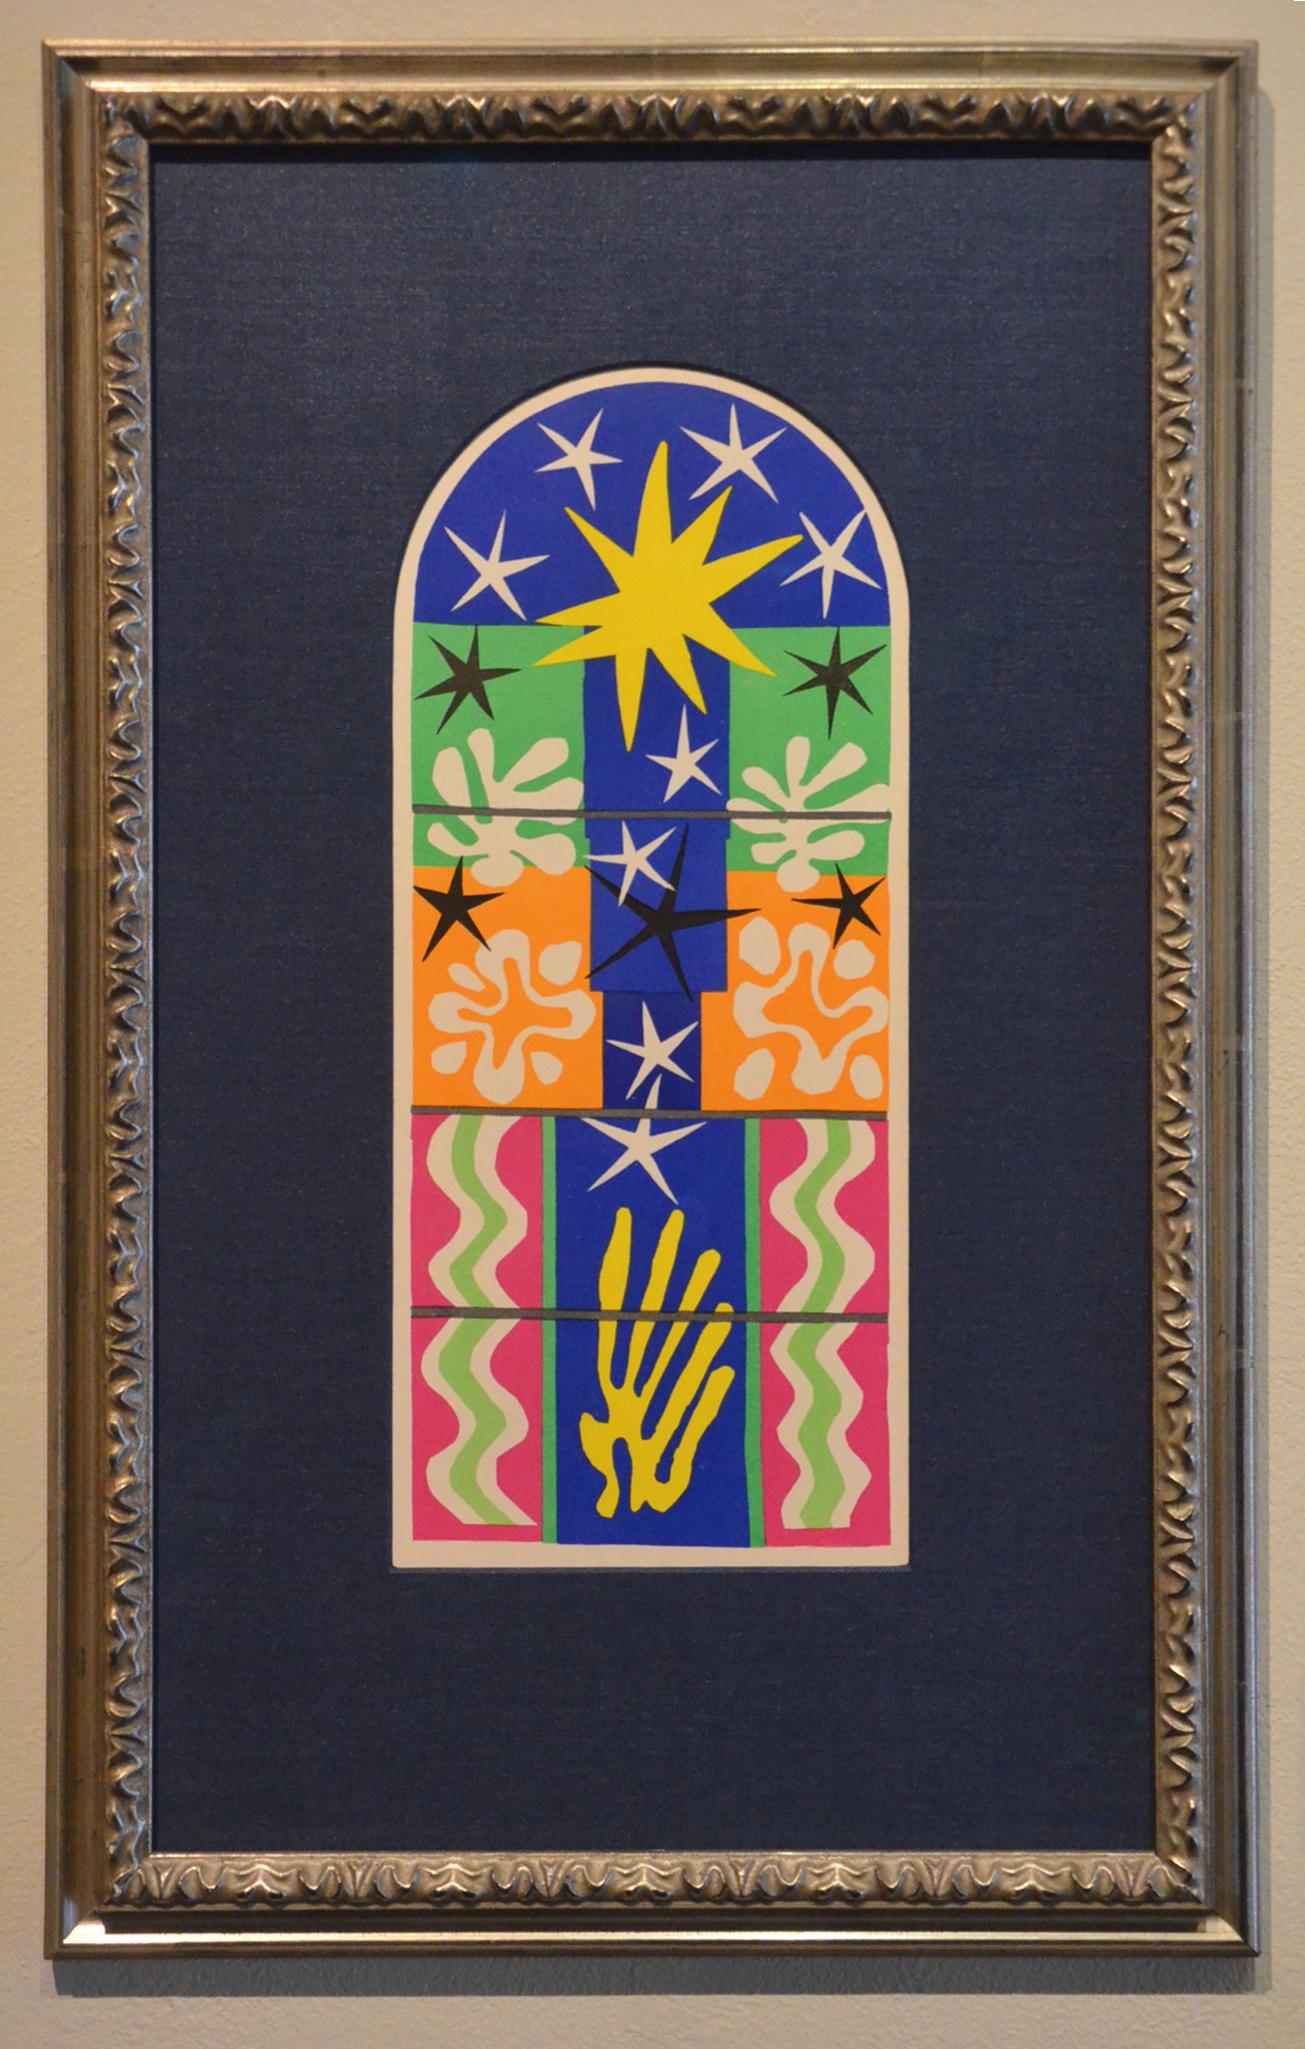 Nuit de Noel, Expressionist, colorful, framed lithograph - Print by Henri Matisse